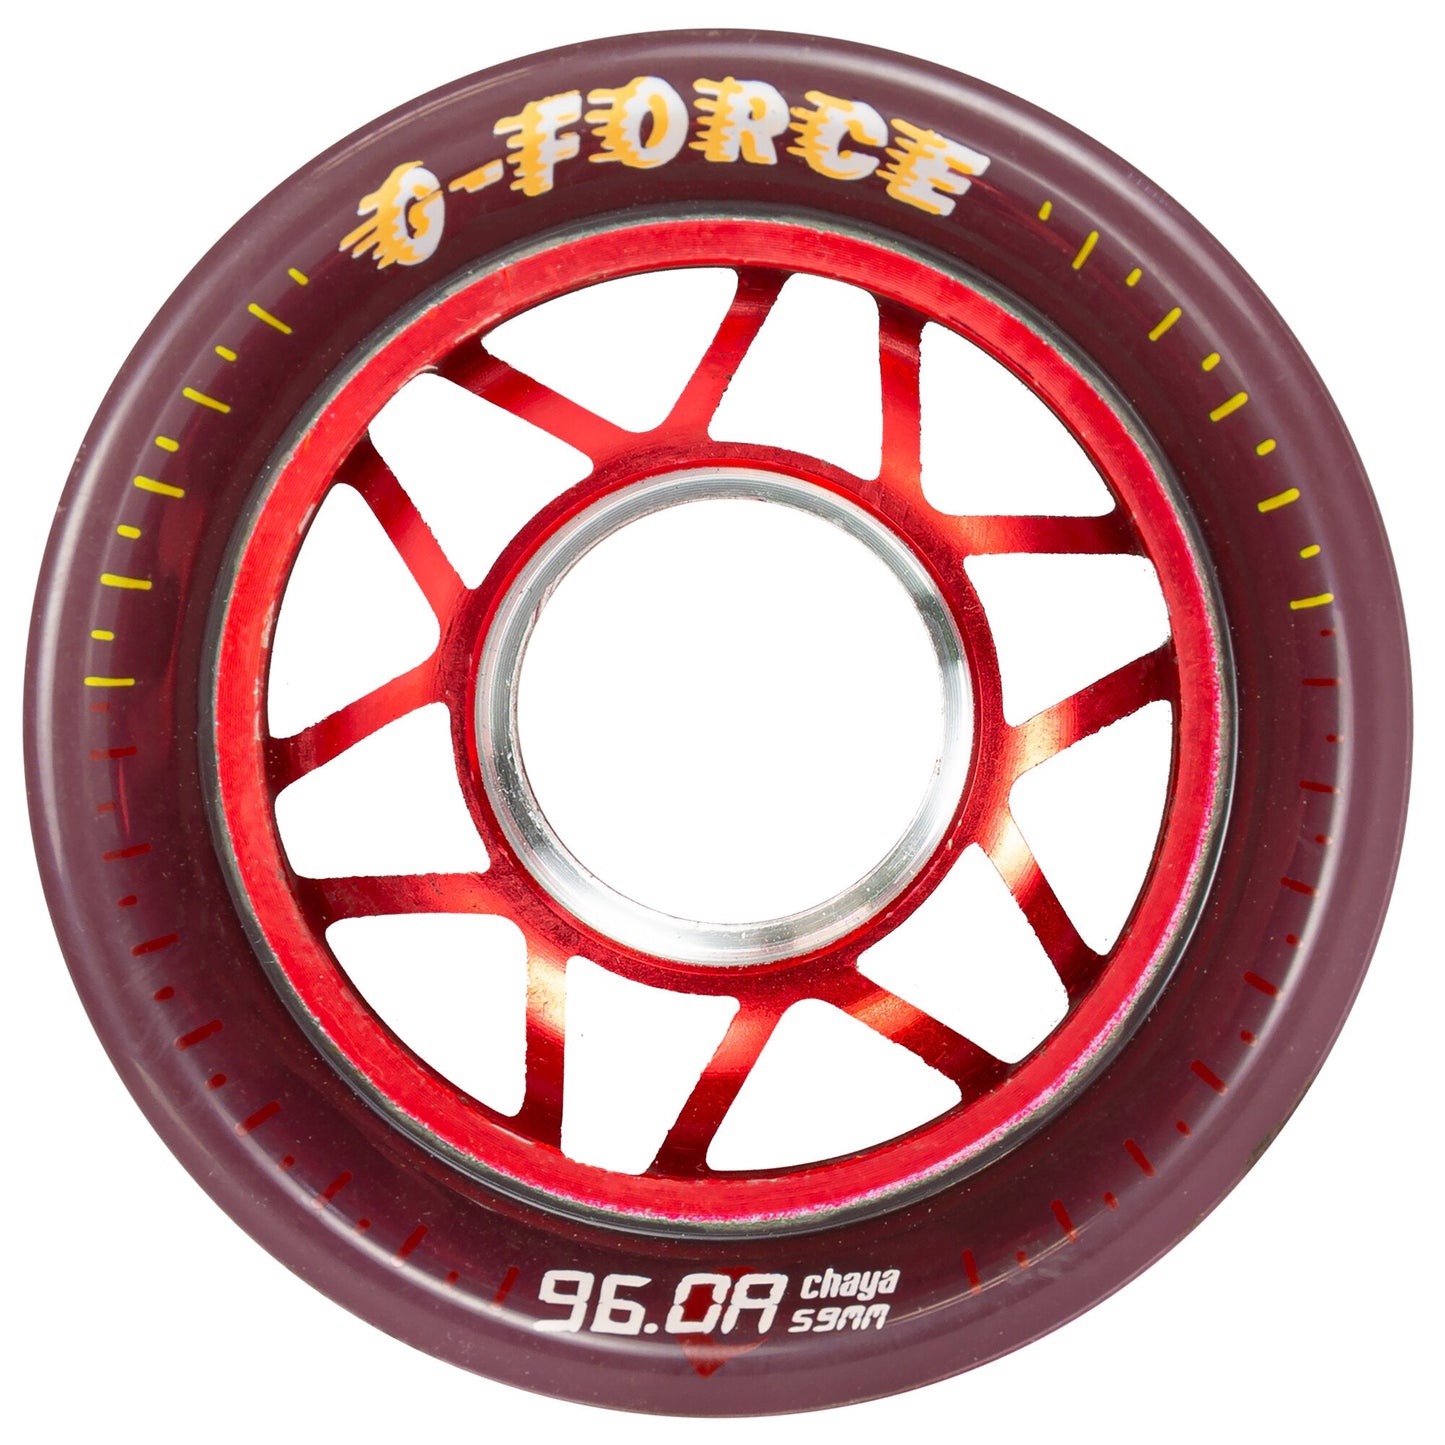 Chaya Roller Derby Wheels G-Force Alloy Hard 96a